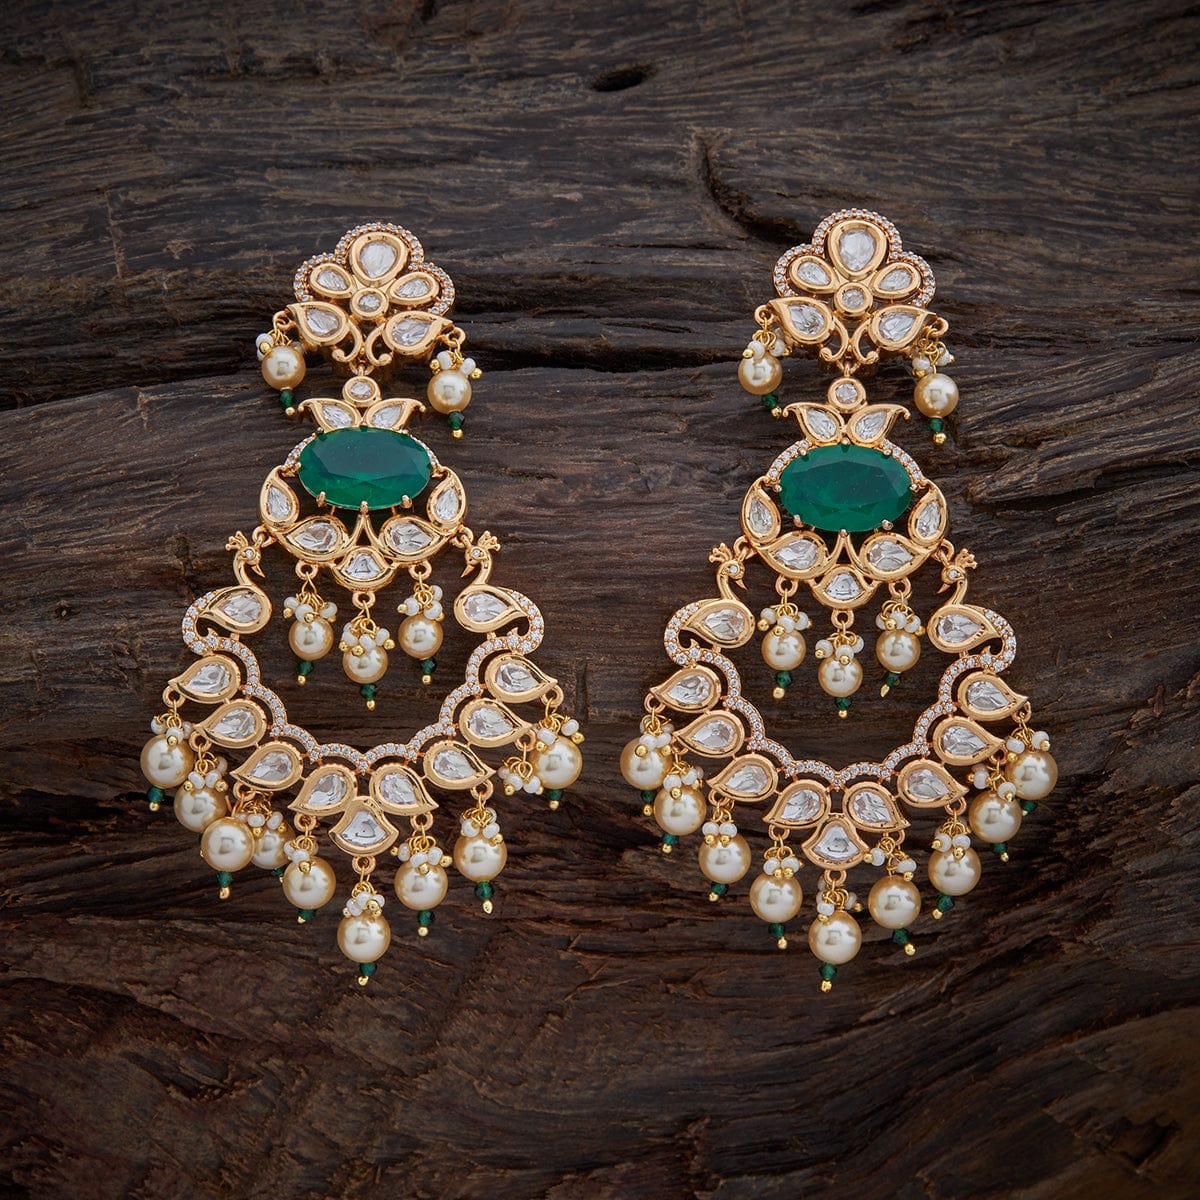 Buy Ambi Shaped Beautiful Ethnic Kundan Earrings with Pearls Hangings for  Women / Girls (Black) at Amazon.in